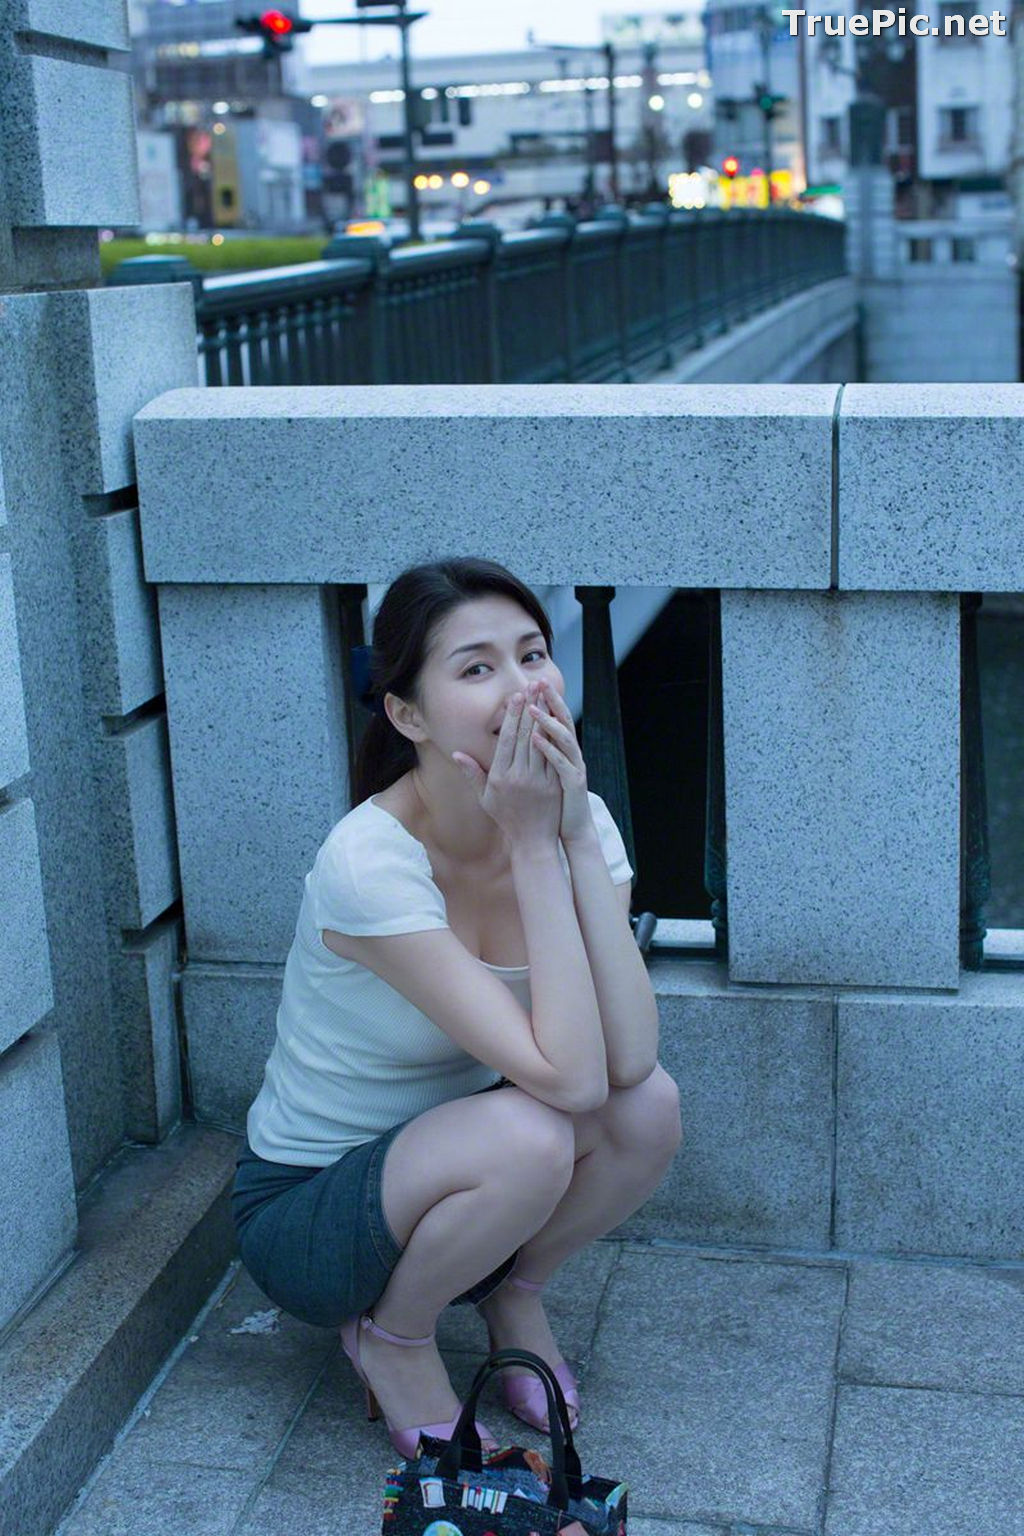 Image Wanibooks No.124 - Japanese Gravure Idol and Actress - Manami Hashimoto - TruePic.net - Picture-9